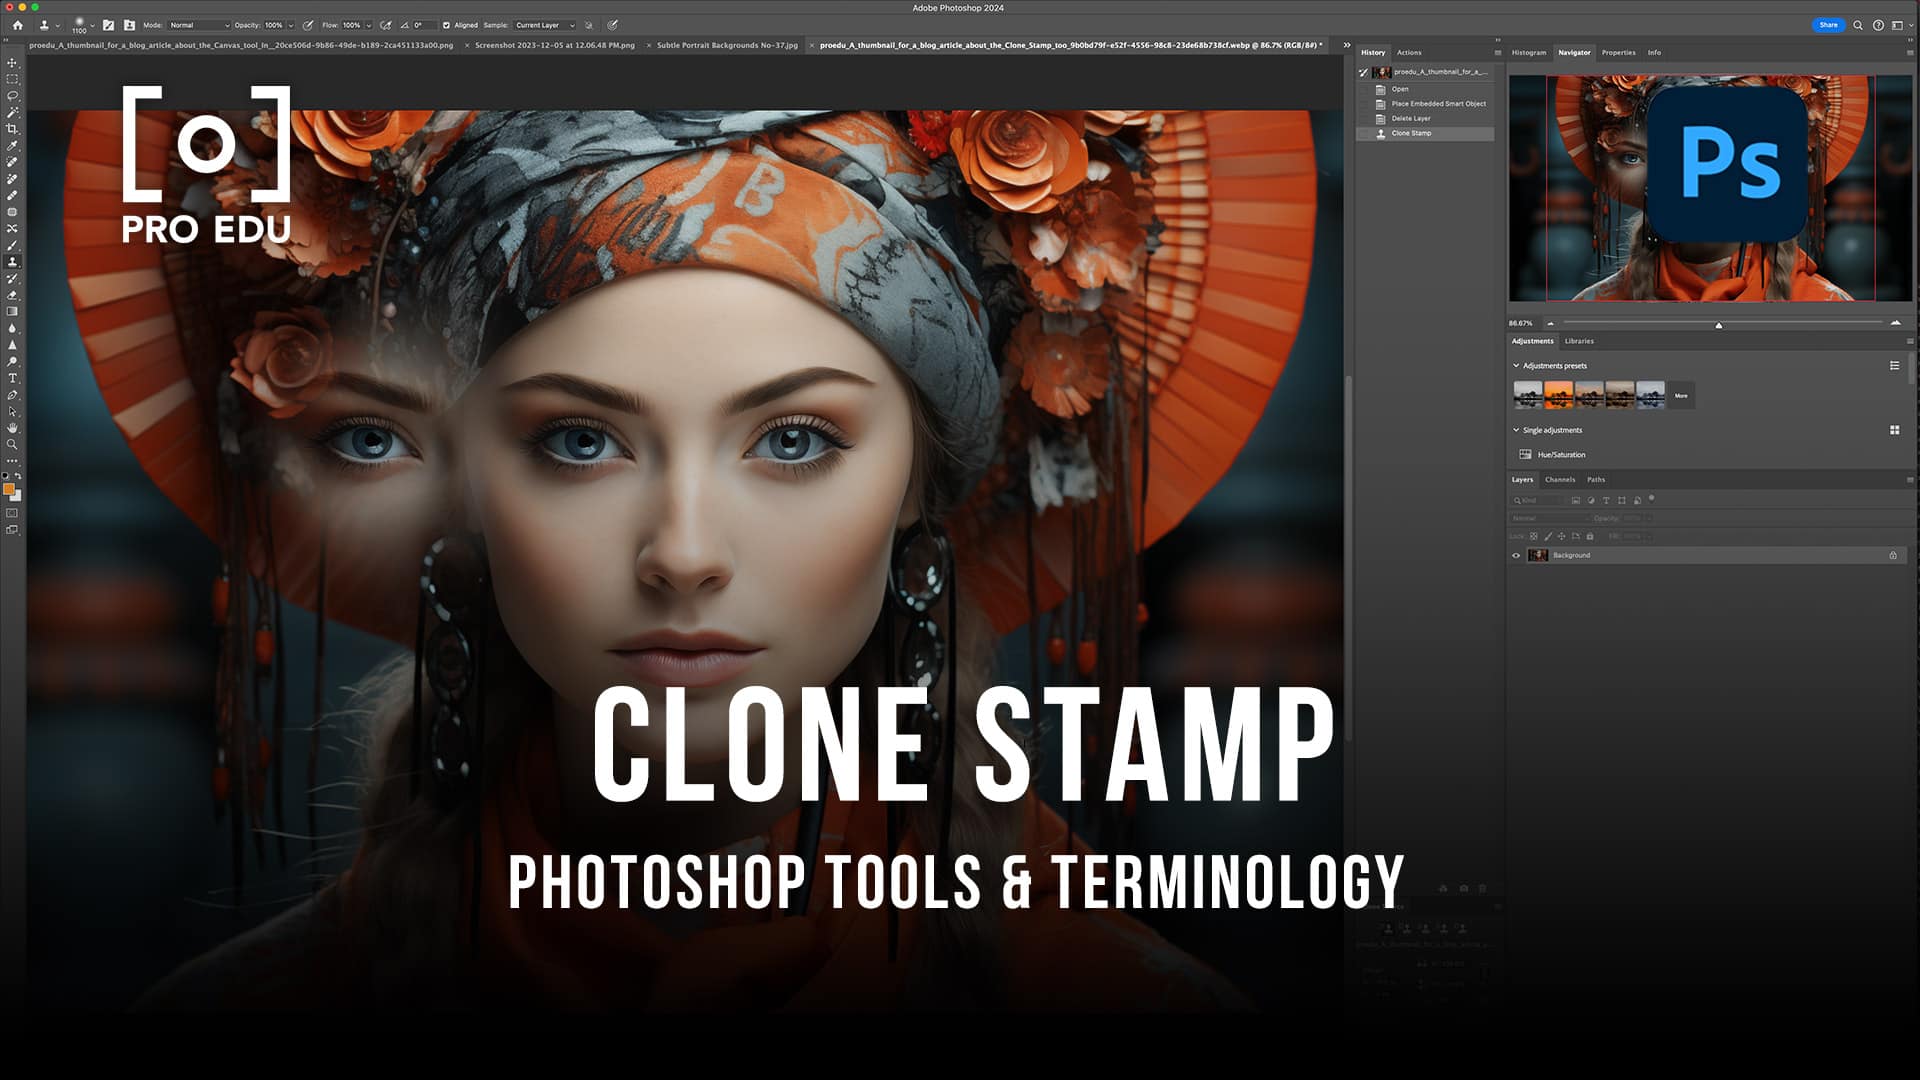 Clone Stamp Tool in Photoshop - PRO EDU Tutorial